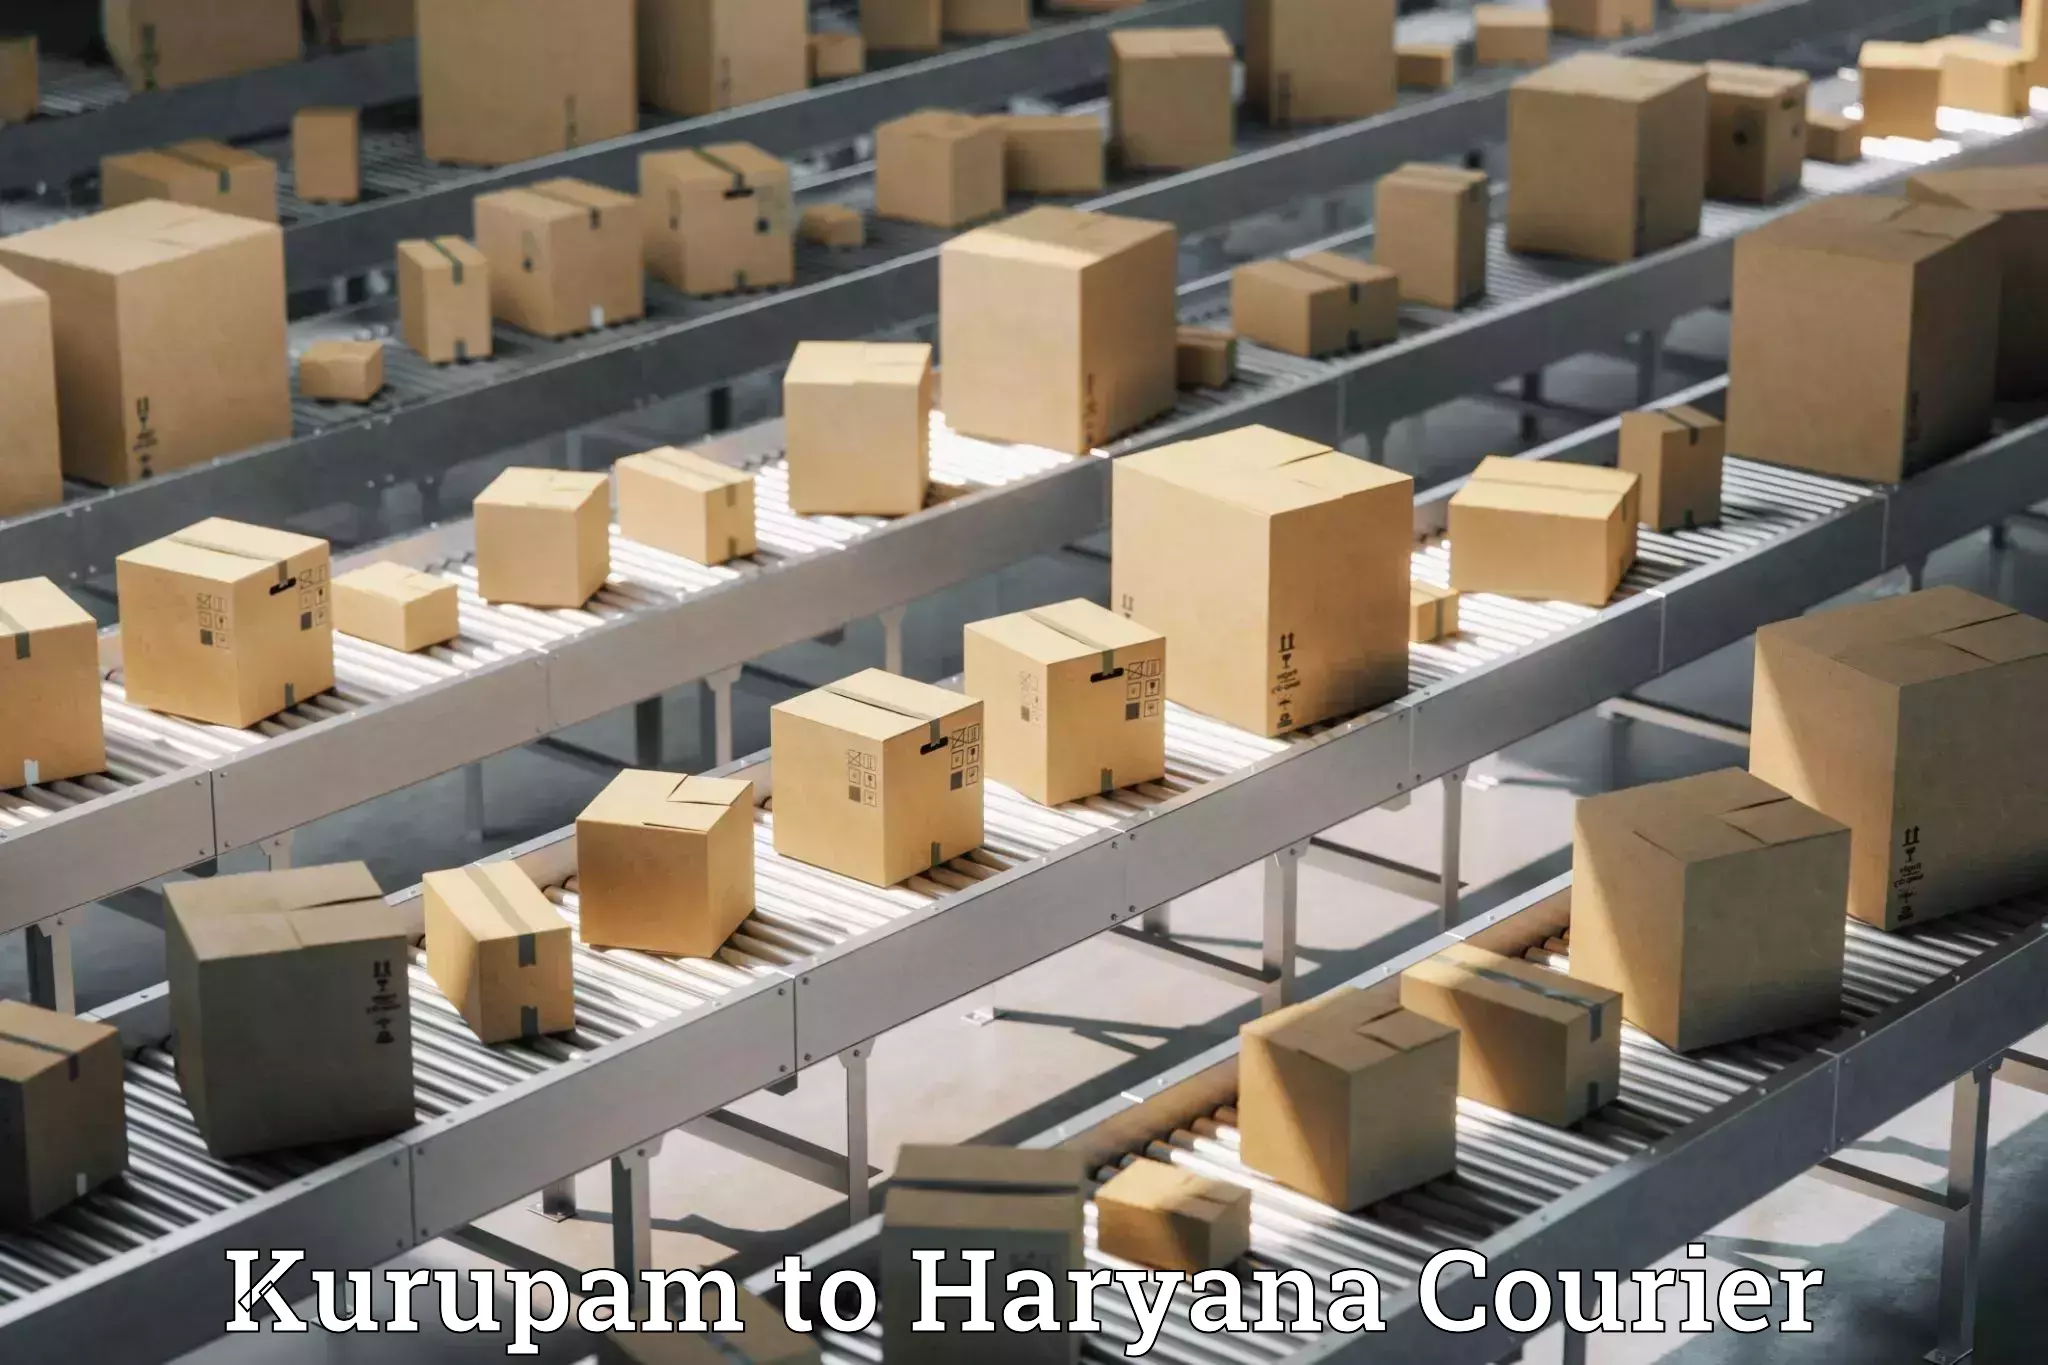 Online package tracking Kurupam to NCR Haryana